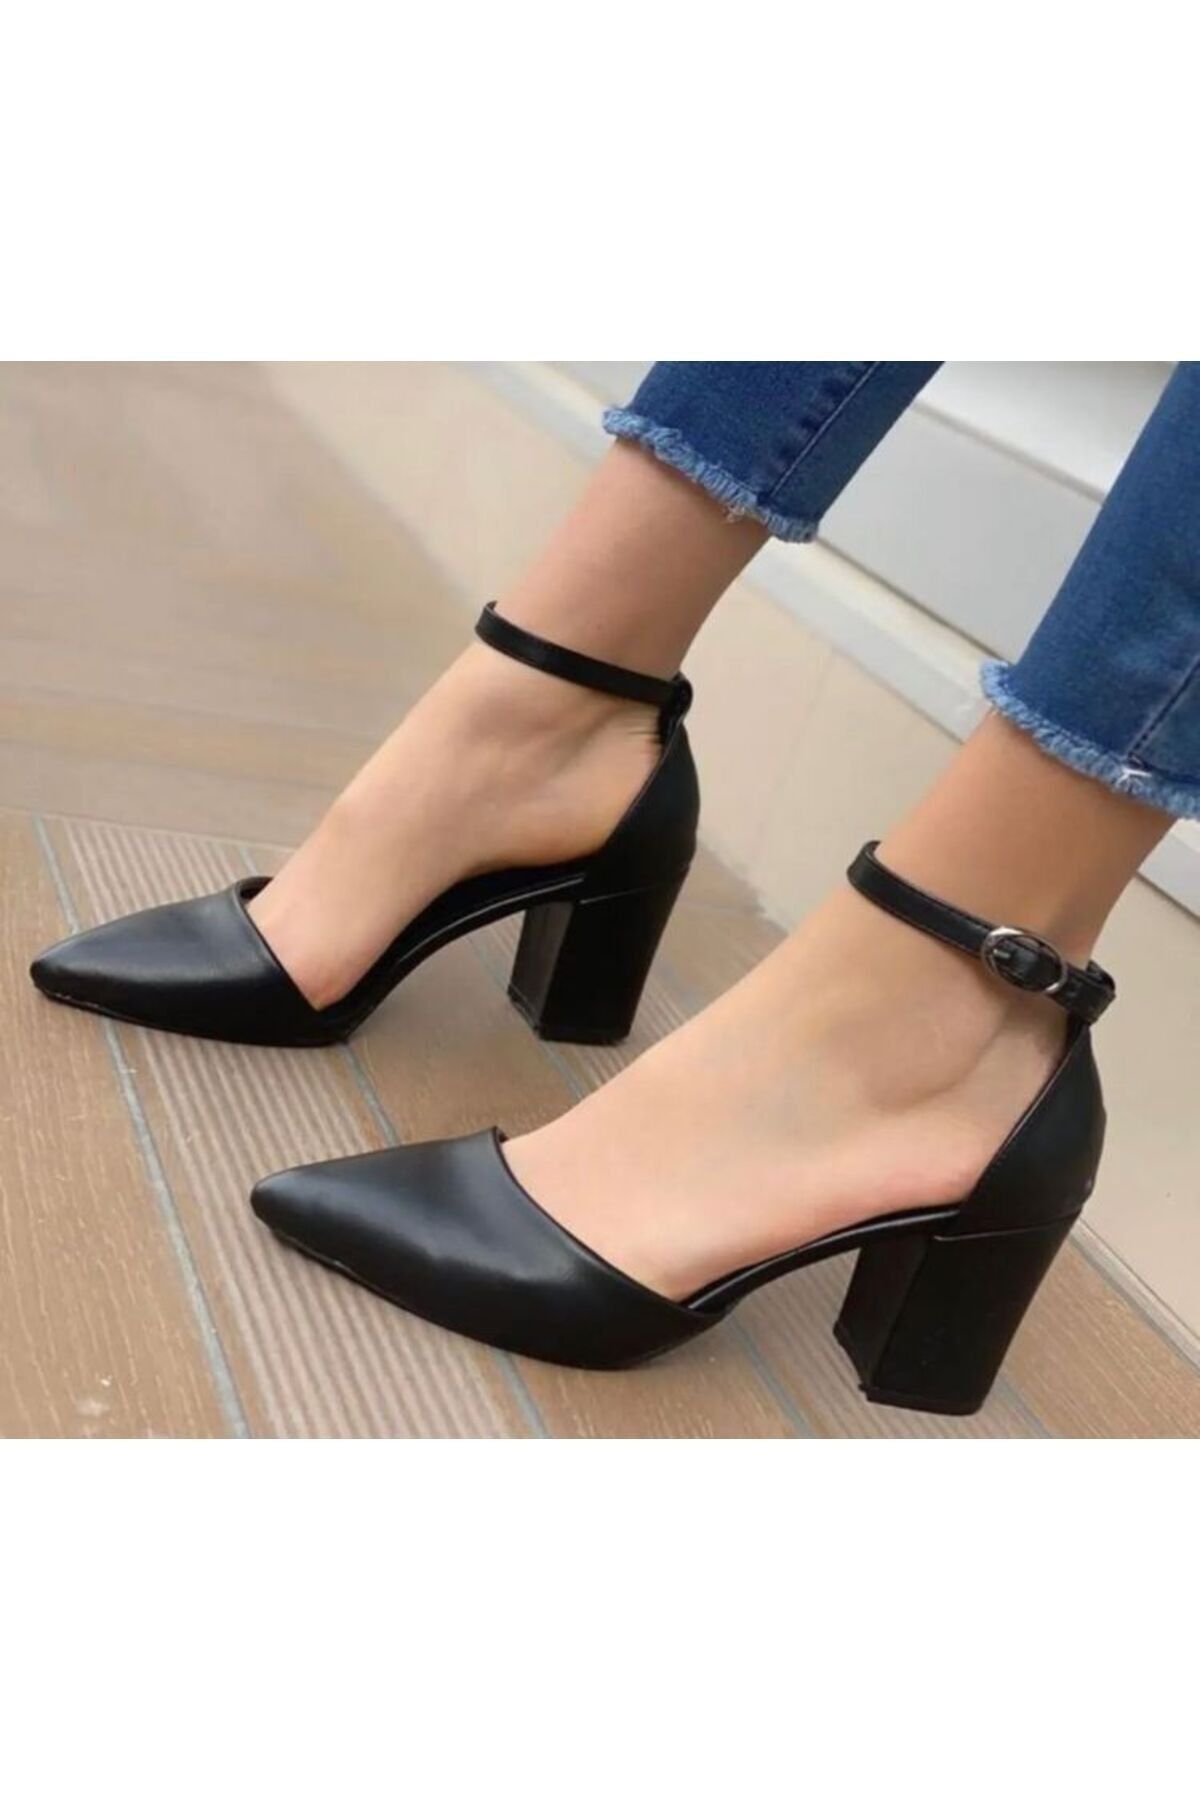 Demashoes Kadın Siyah Tek Bant Topuklu Ayakkabı